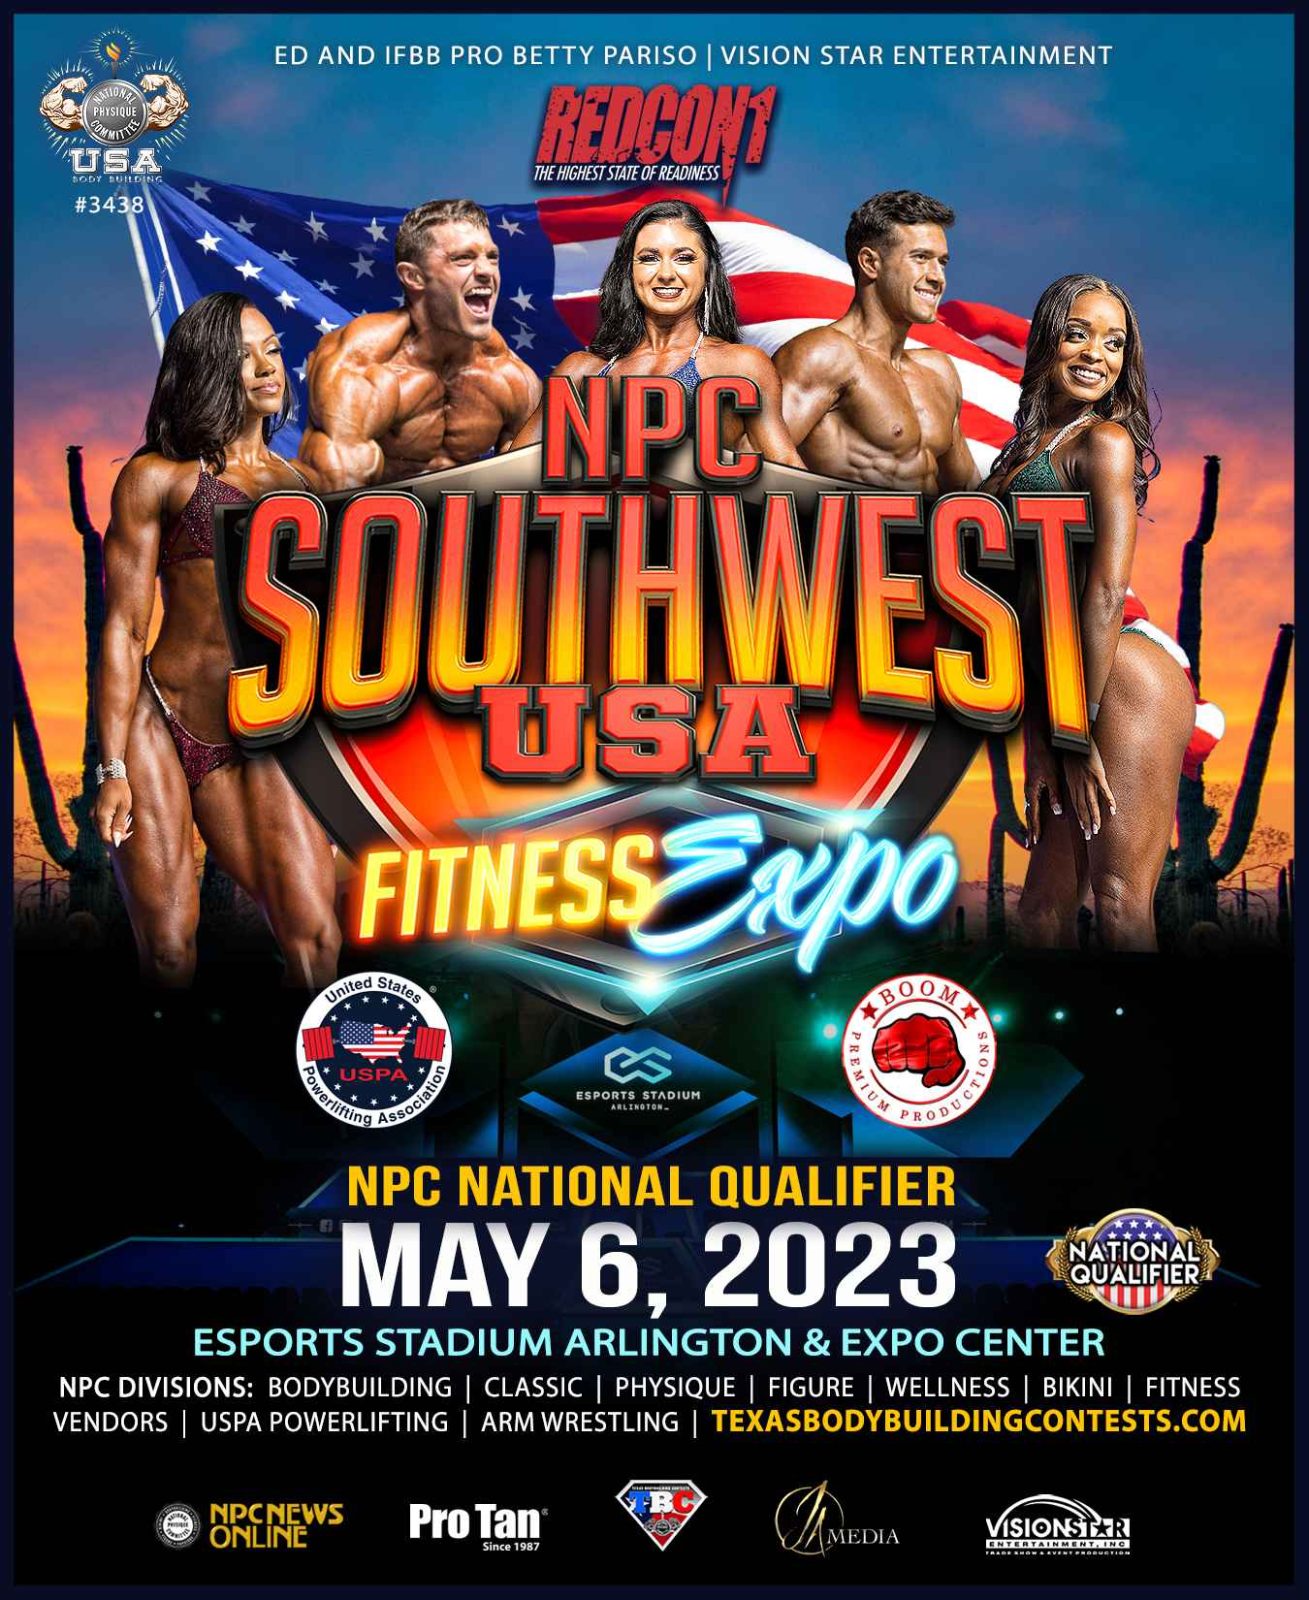 NPC Southwest USA Fit Expo Texas Bodybuilding Contests